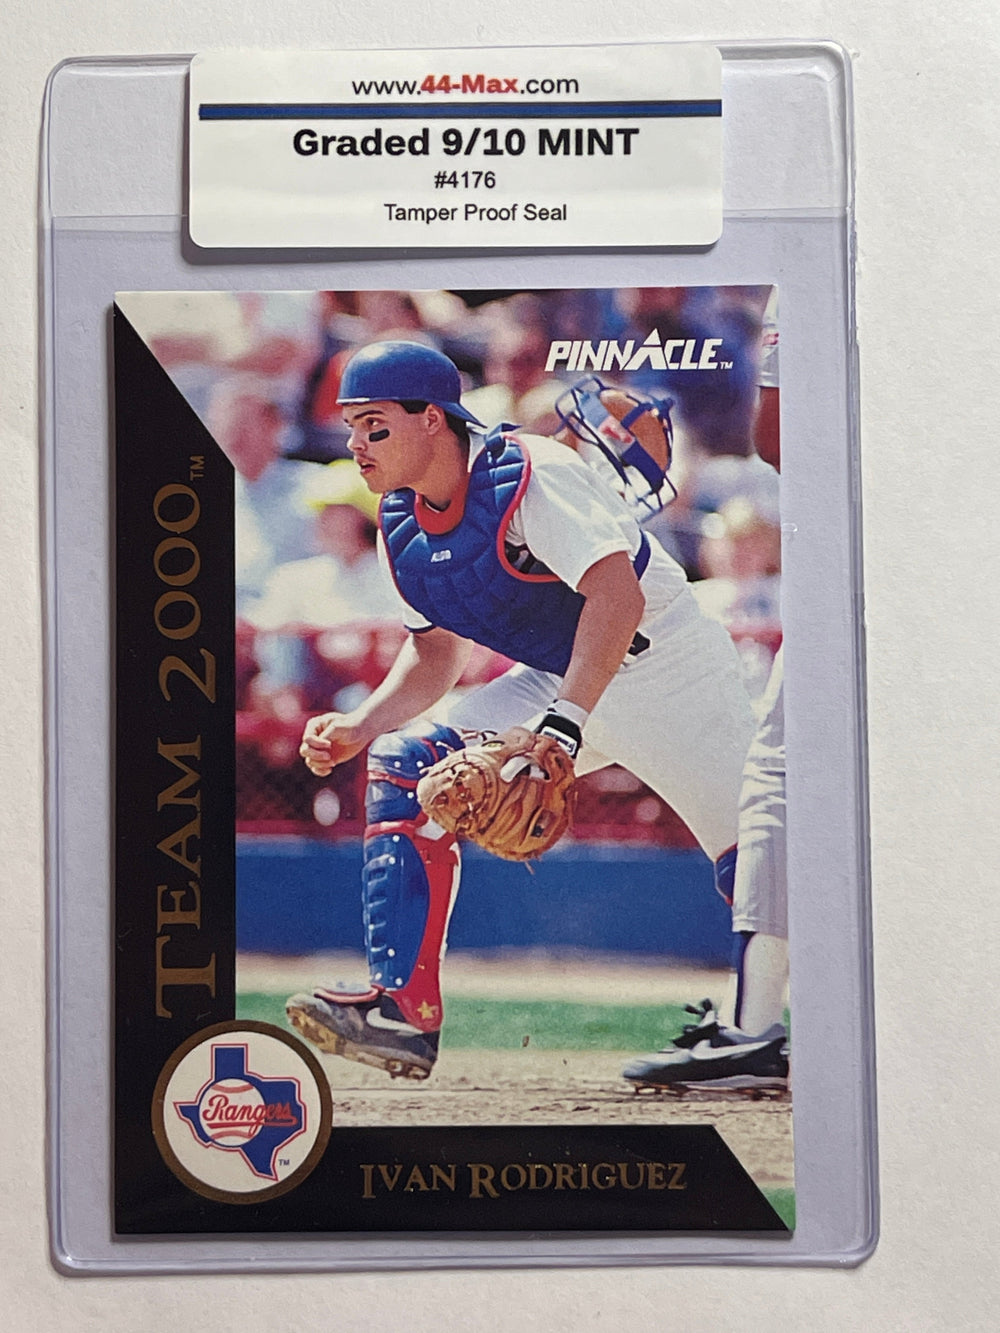 Ivan Rodriguez Team 2000 1992 Pinnacle Baseball Card. 44-Max 9/10 Mint #4176